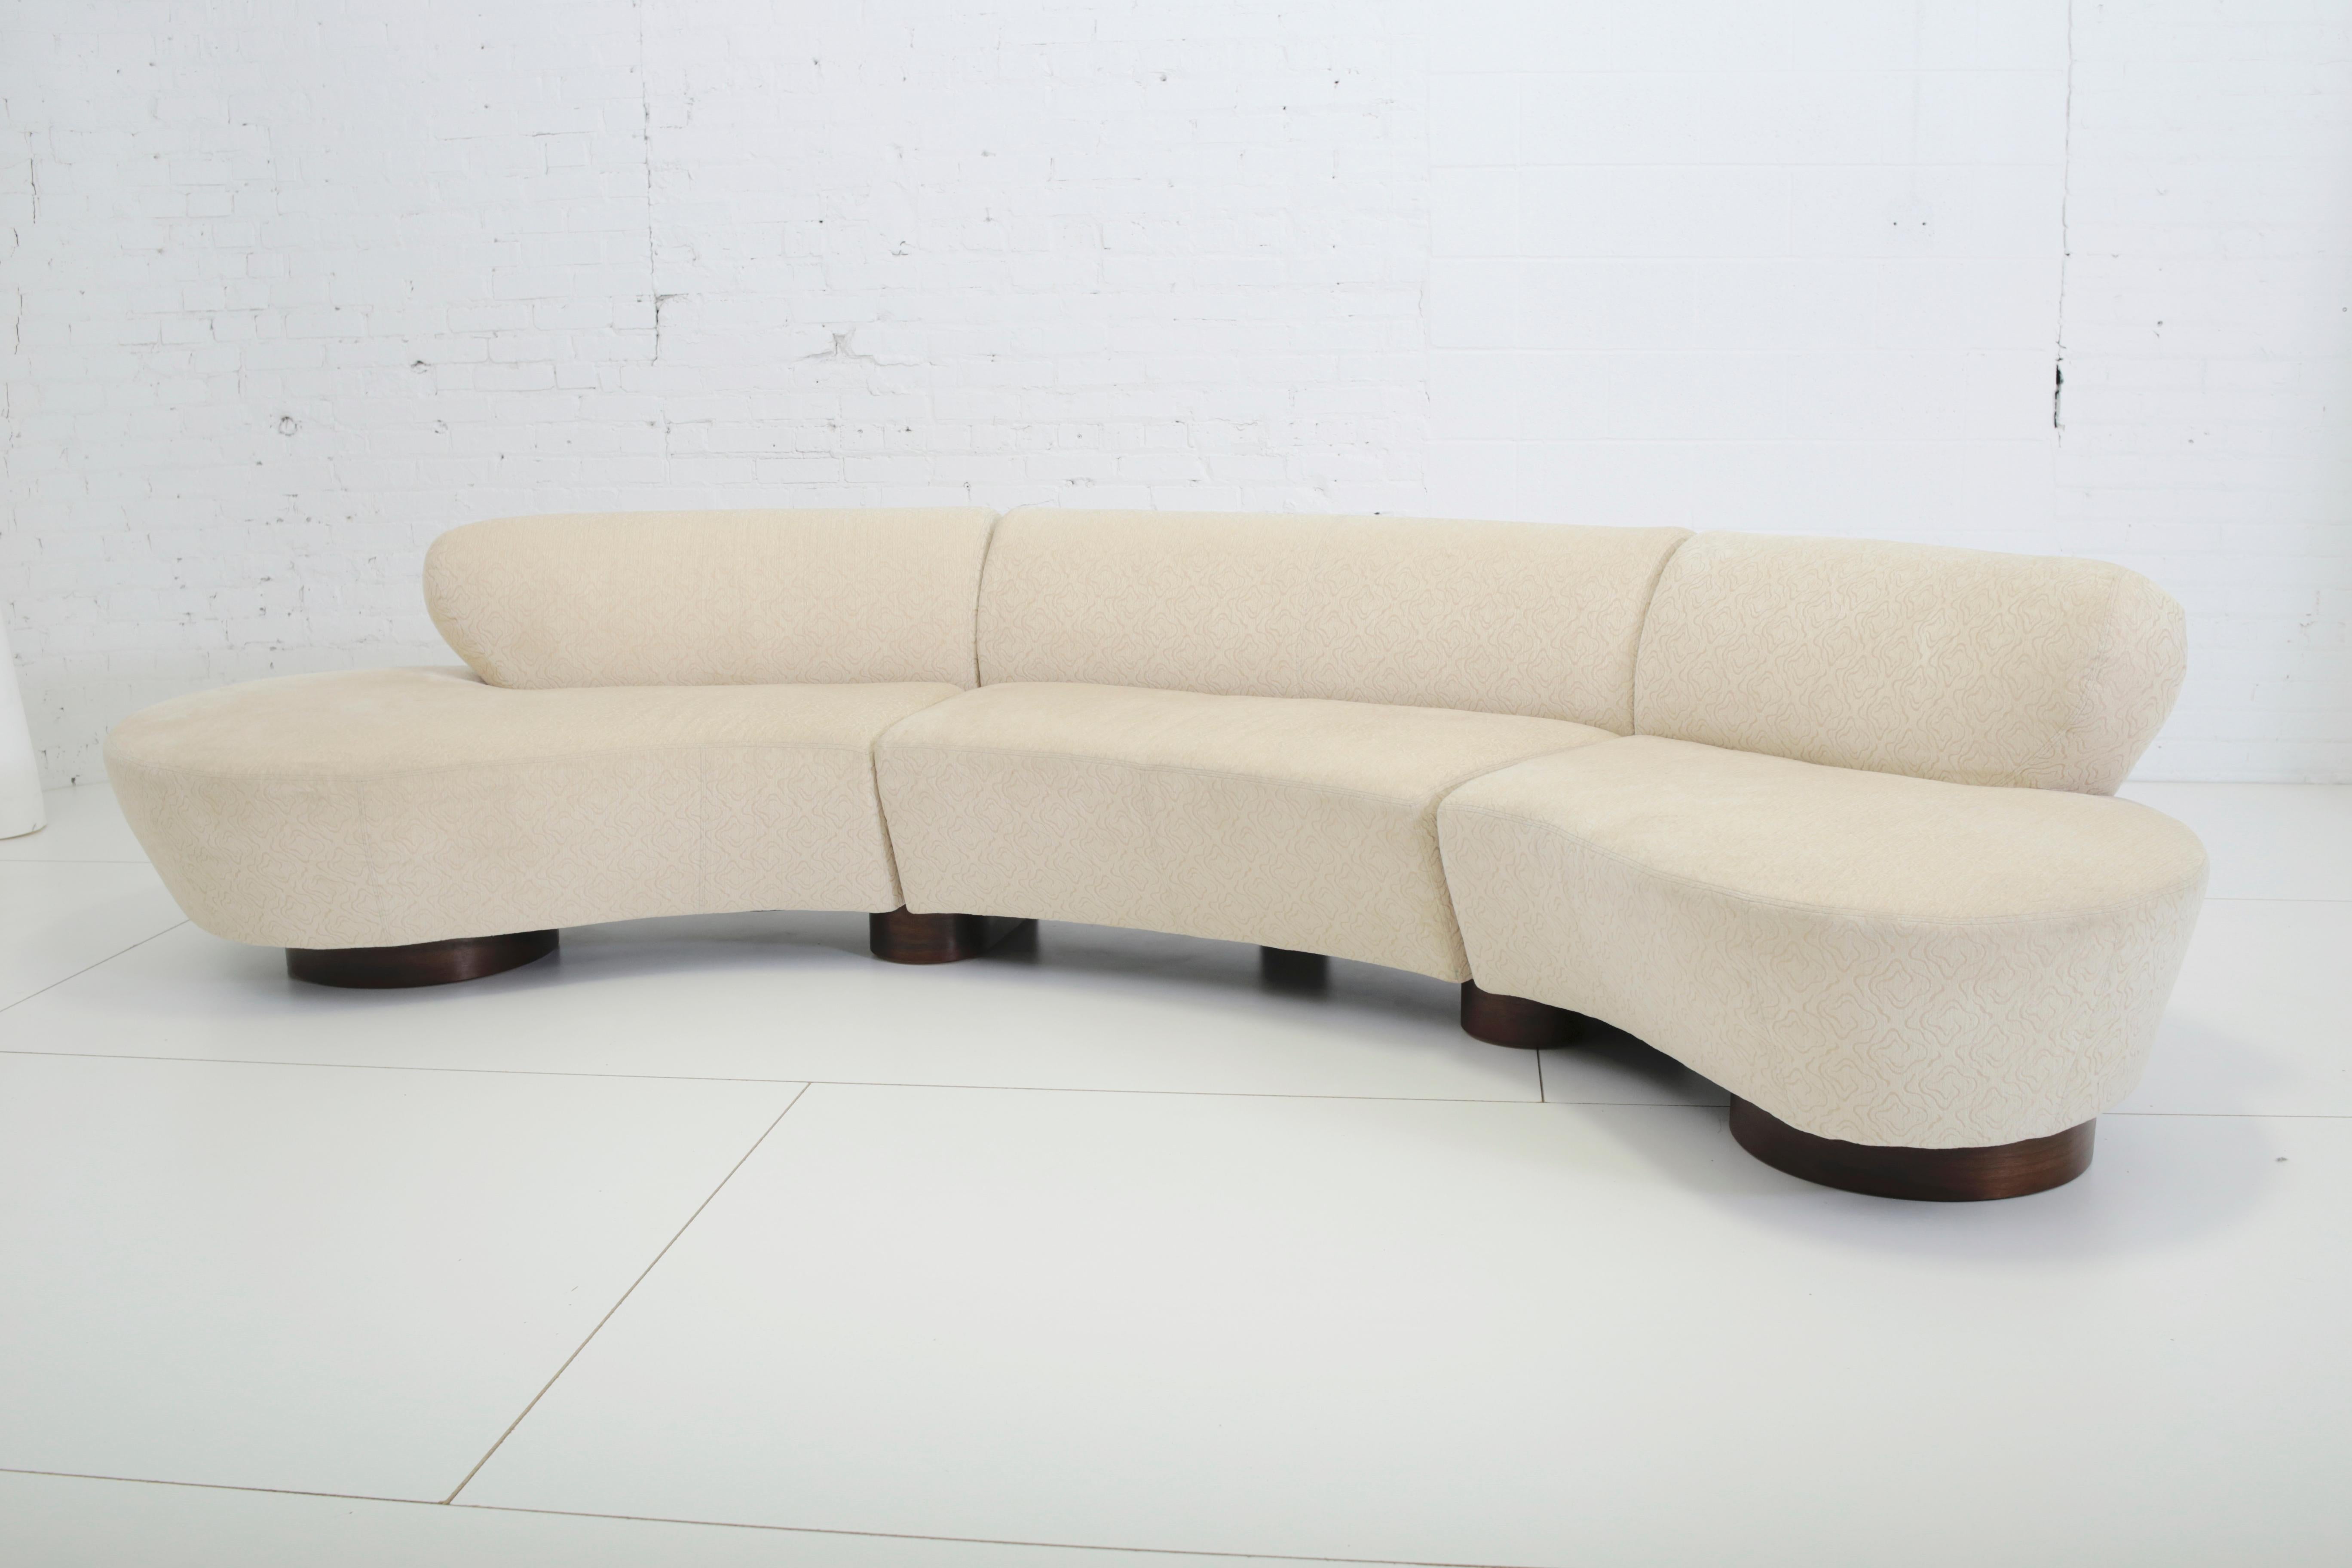 Three-piece sectional sofa designed by Vladimir Kagan for Directional. Original fabric on walnut bases.